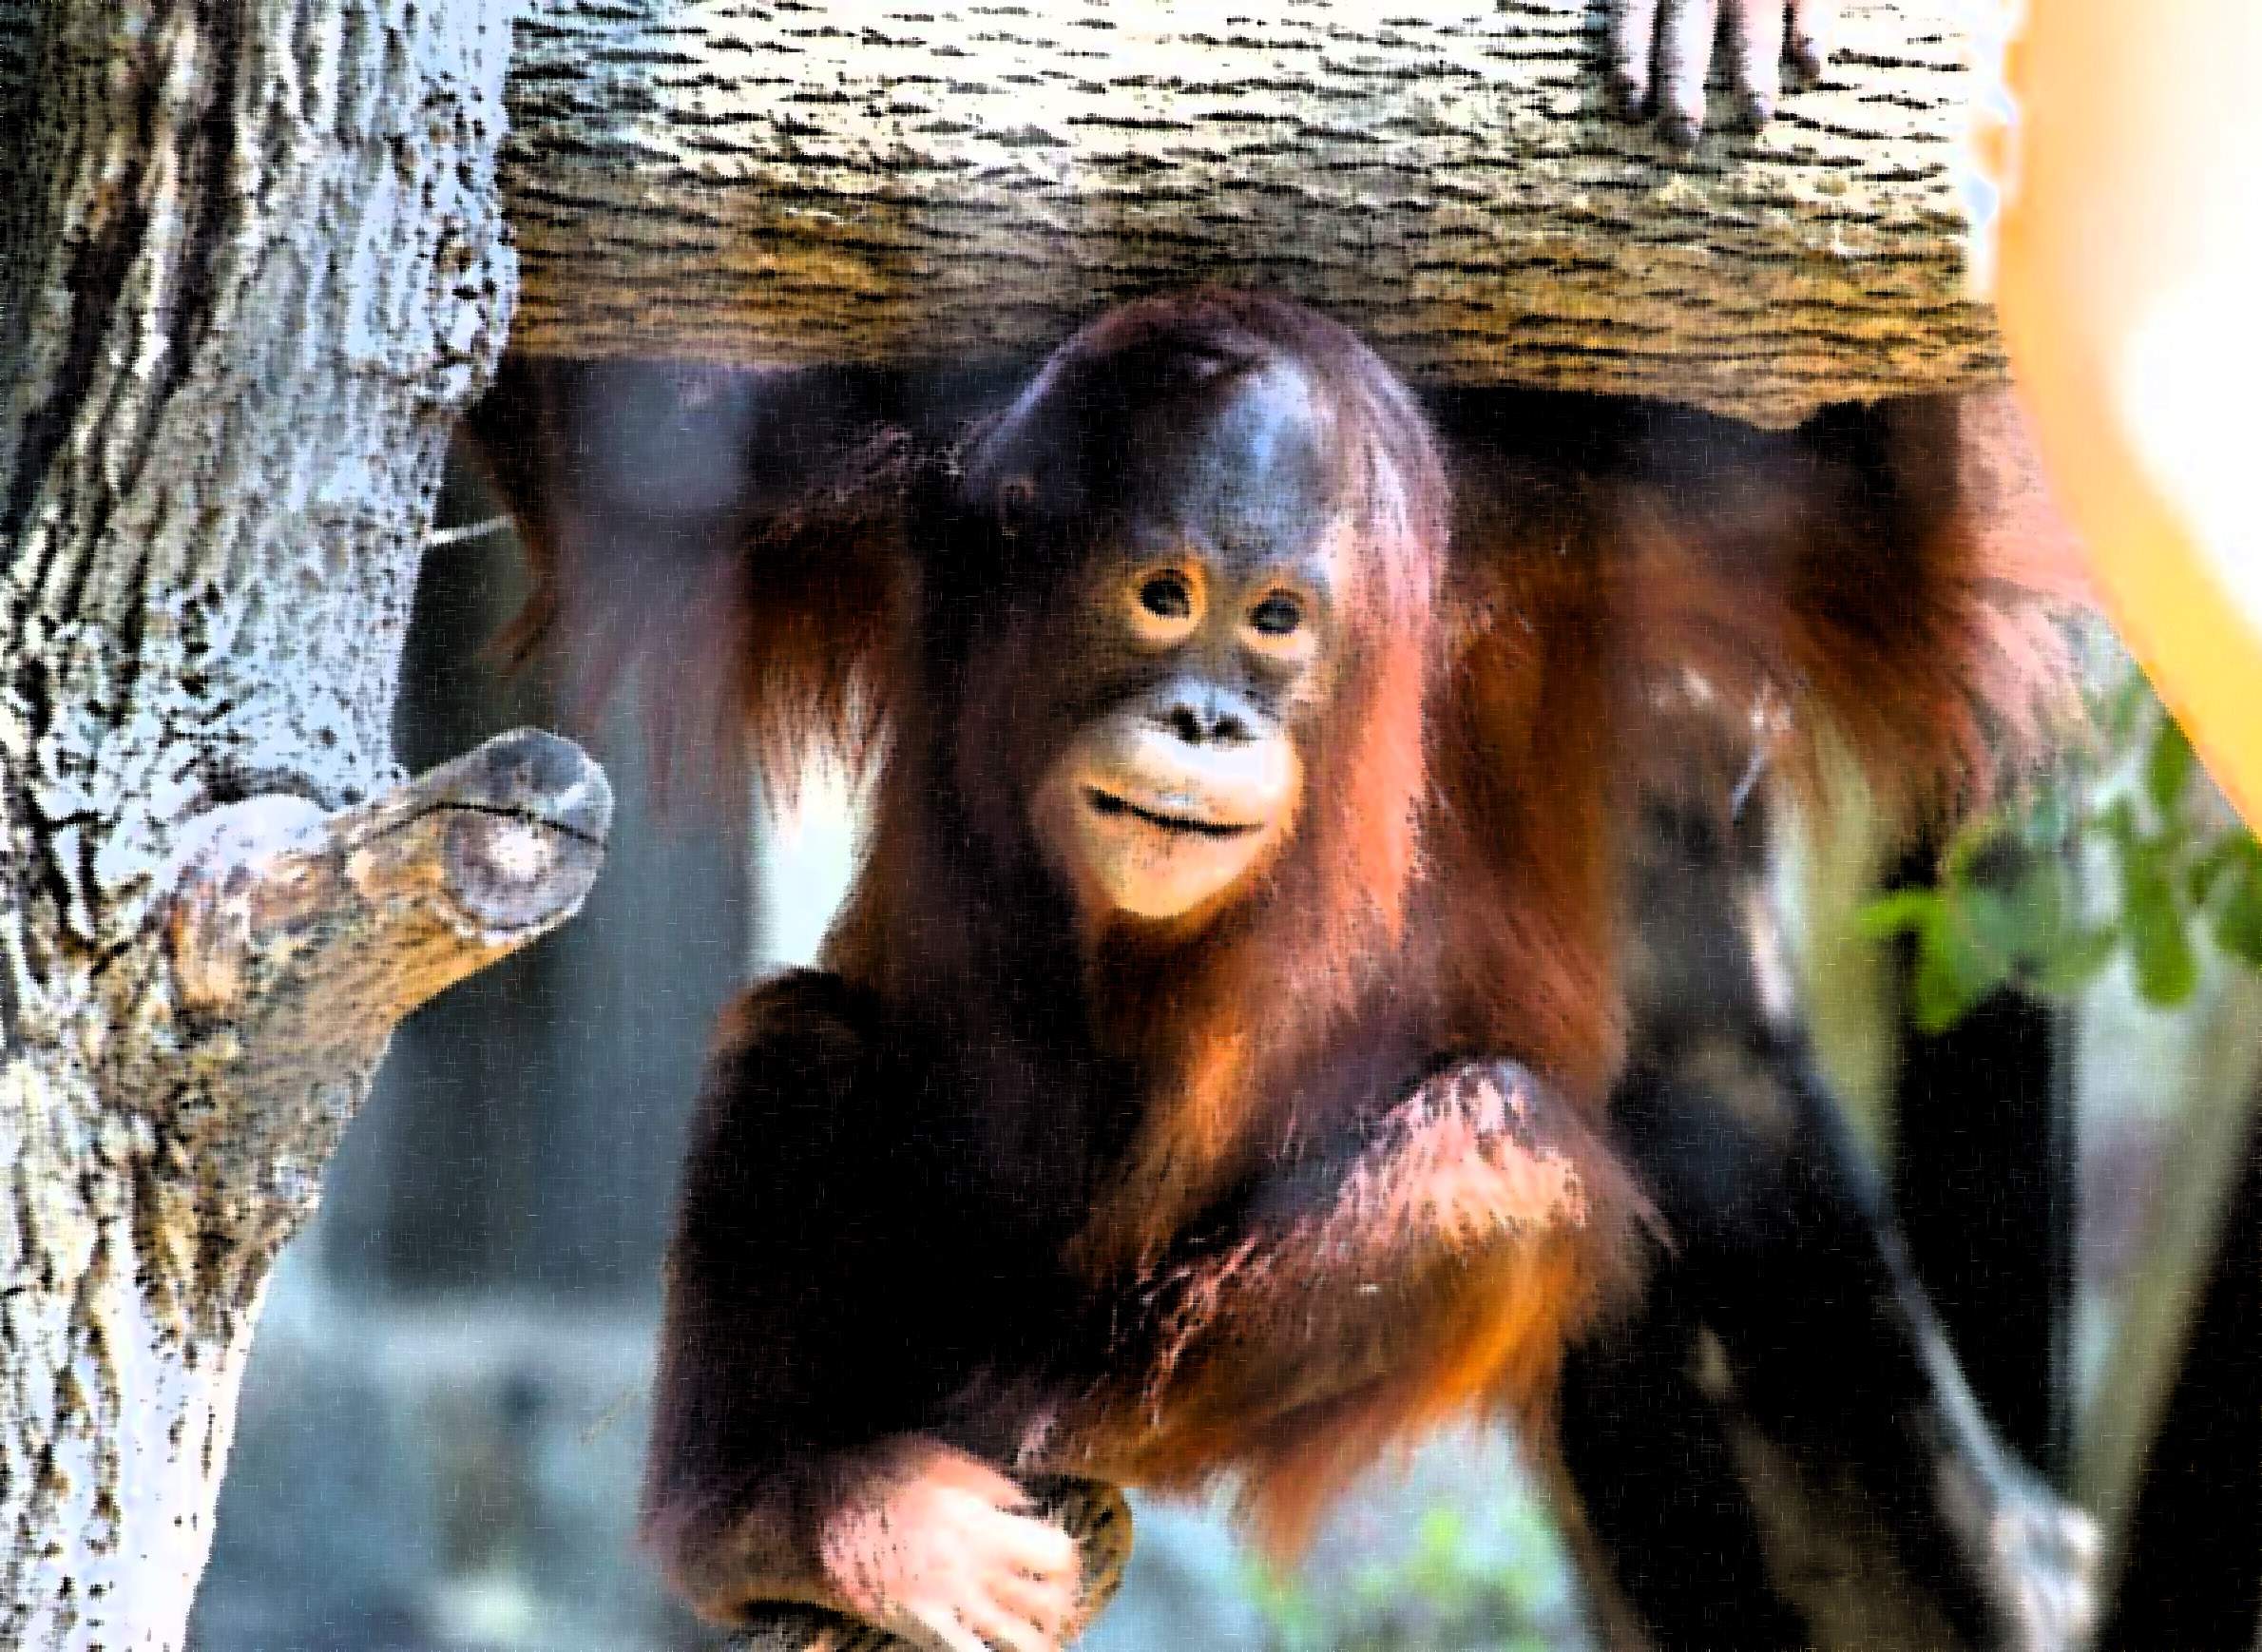 uplace-health-disease-science-animals-zoonotic-orangutan-mahal-illustration.jpg